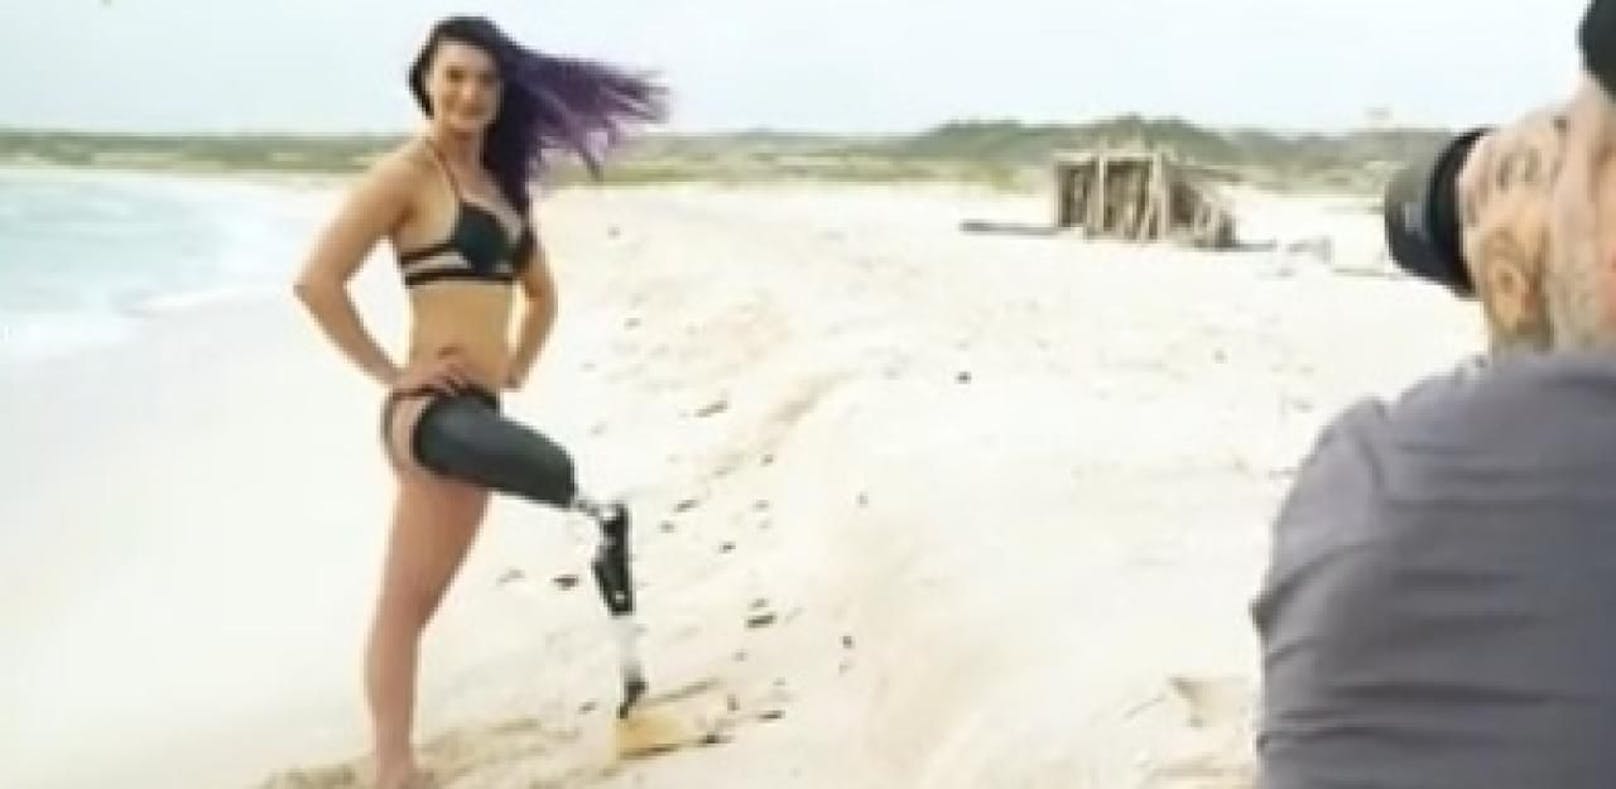 Paralympics-Star posiert mit Beinprothese im Bikini